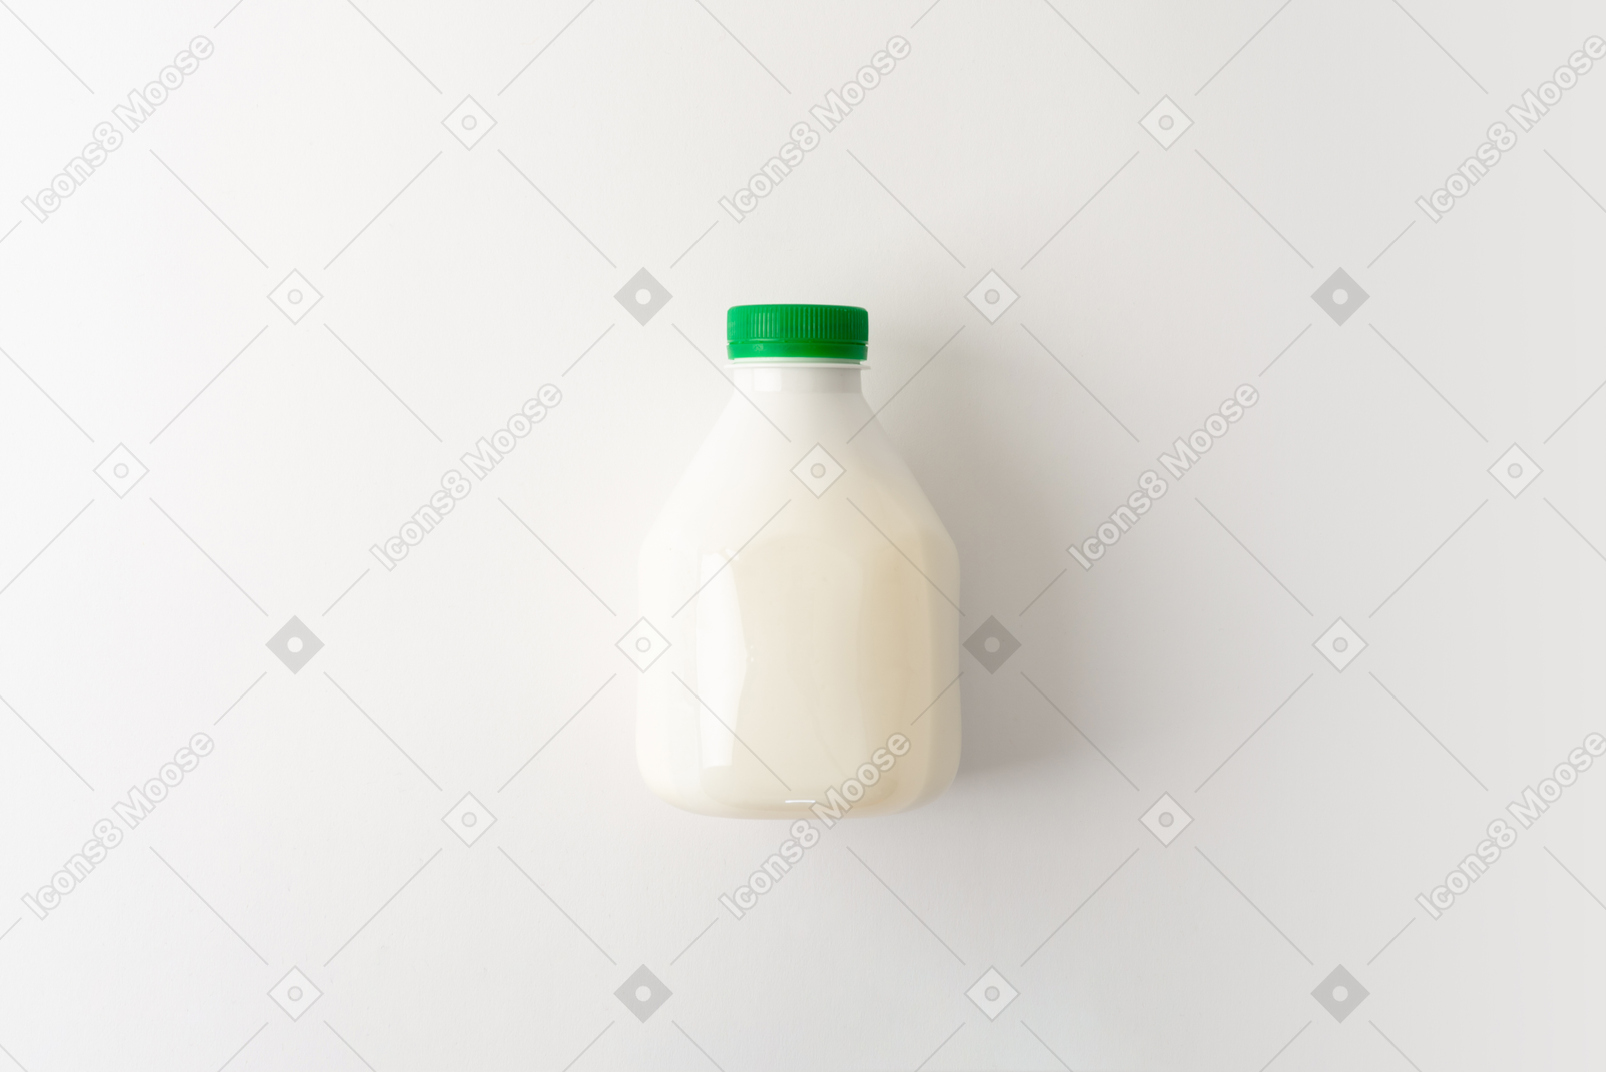 Pequeña botella de plástico con algún producto lácteo dentro.